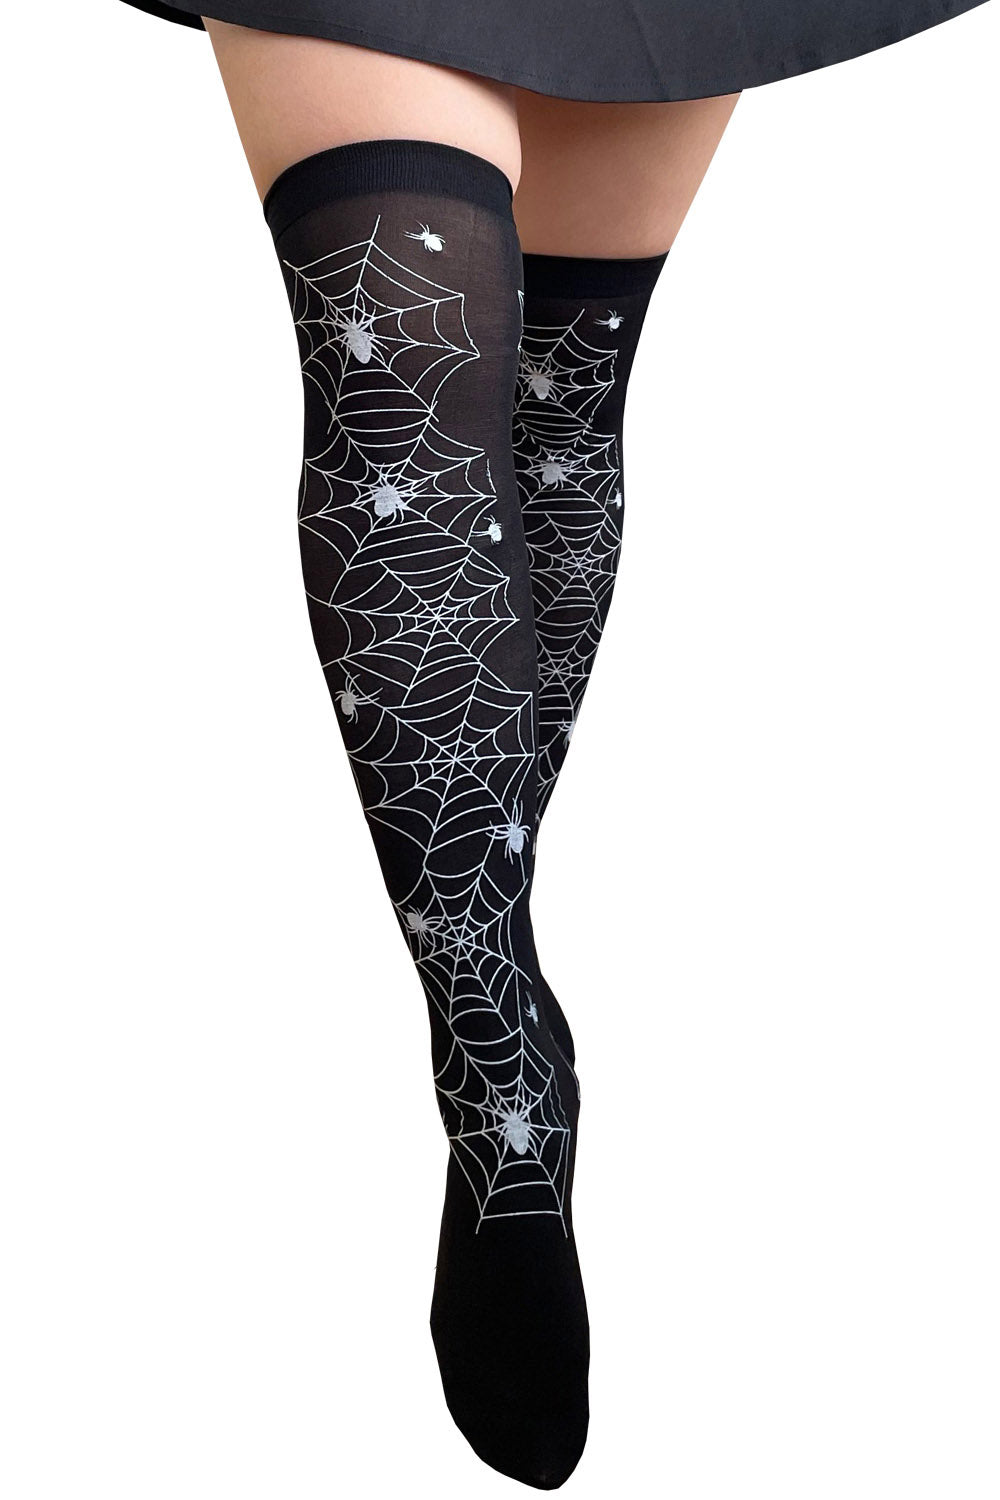 Web Stockings